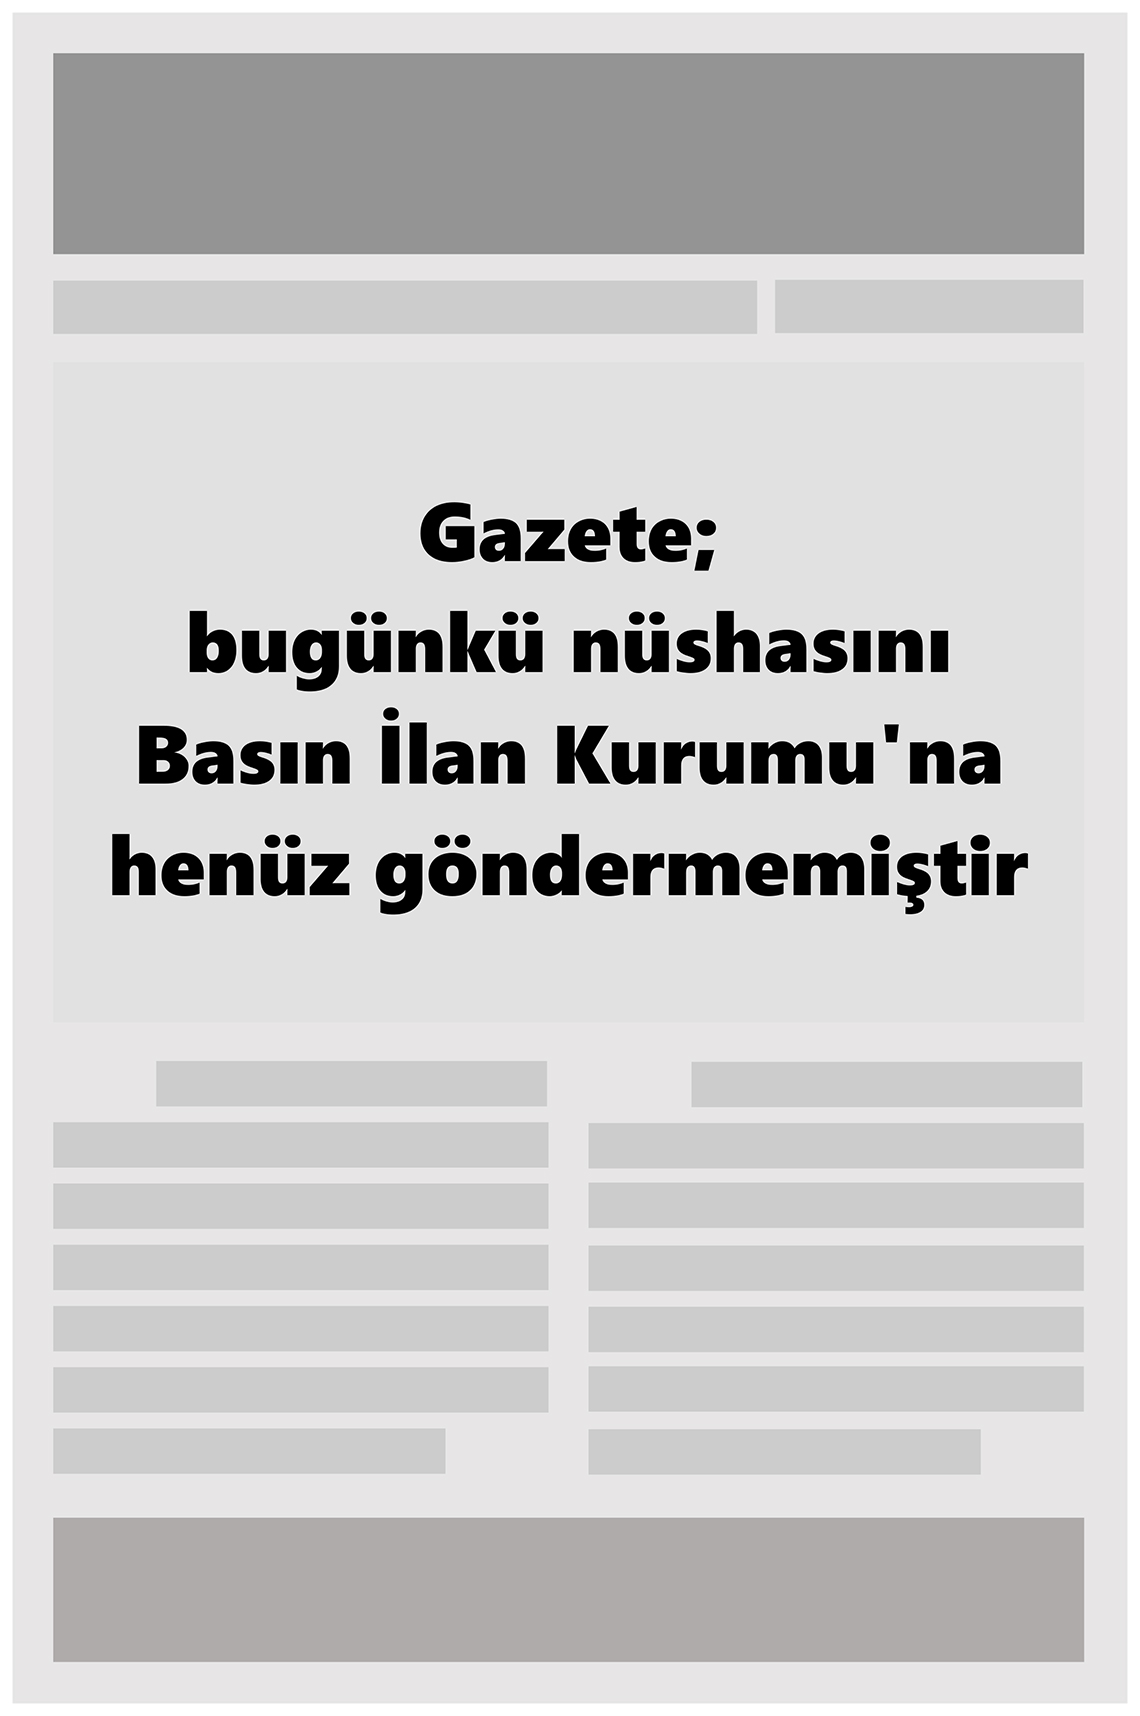 Adana Güney Haber Gazete Manşeti